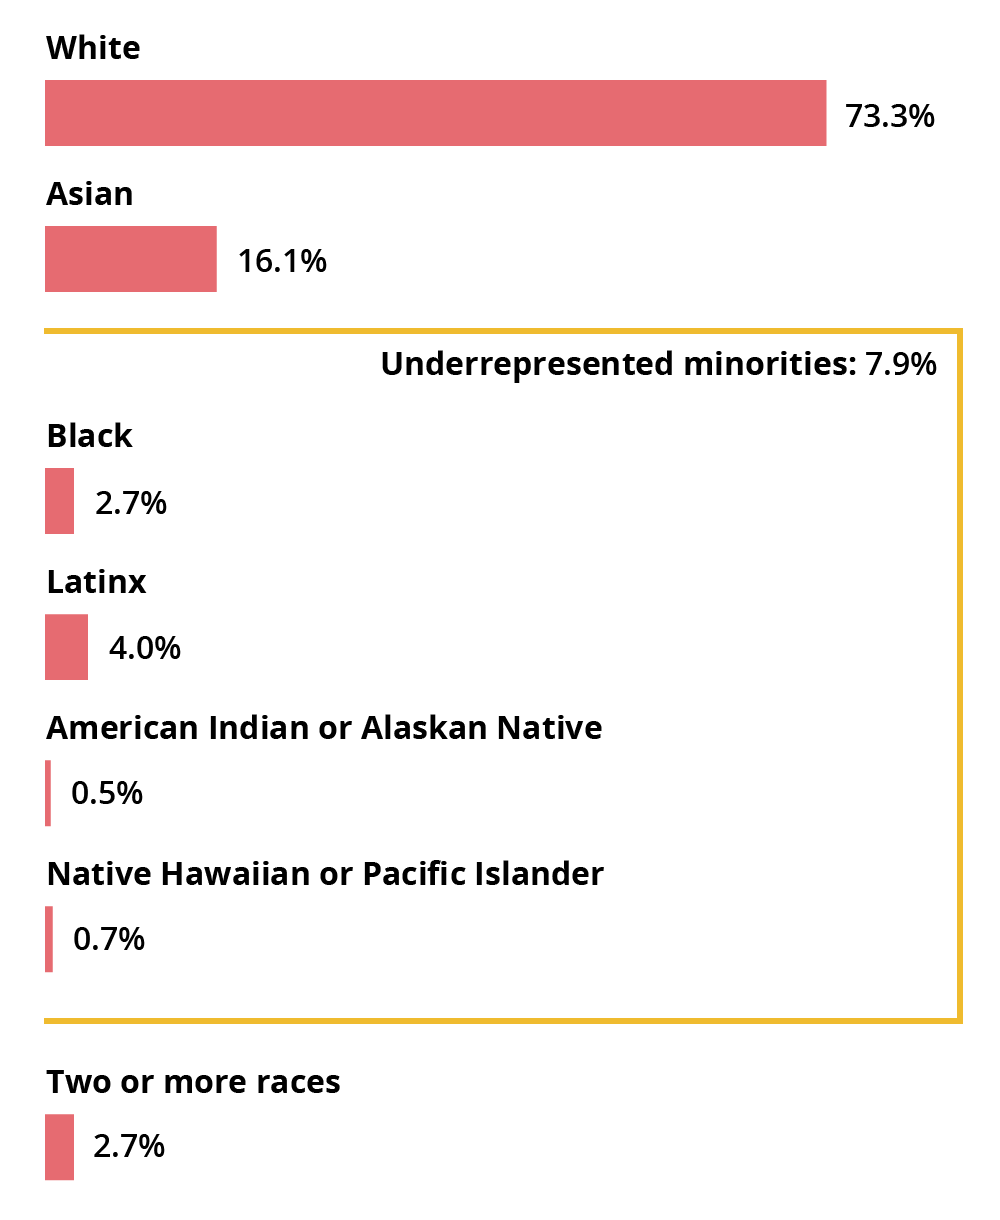 White: 73.3%, Asian: 16.1%, Black: 2.7%, Latinx: 4.0%, American Indian or Alaskan Native: 0.5%, Native Hawaiian or Pacific Islander: 0.7%, Two or more races: 2.7%. Underrepresented minorities total: 7.9%.